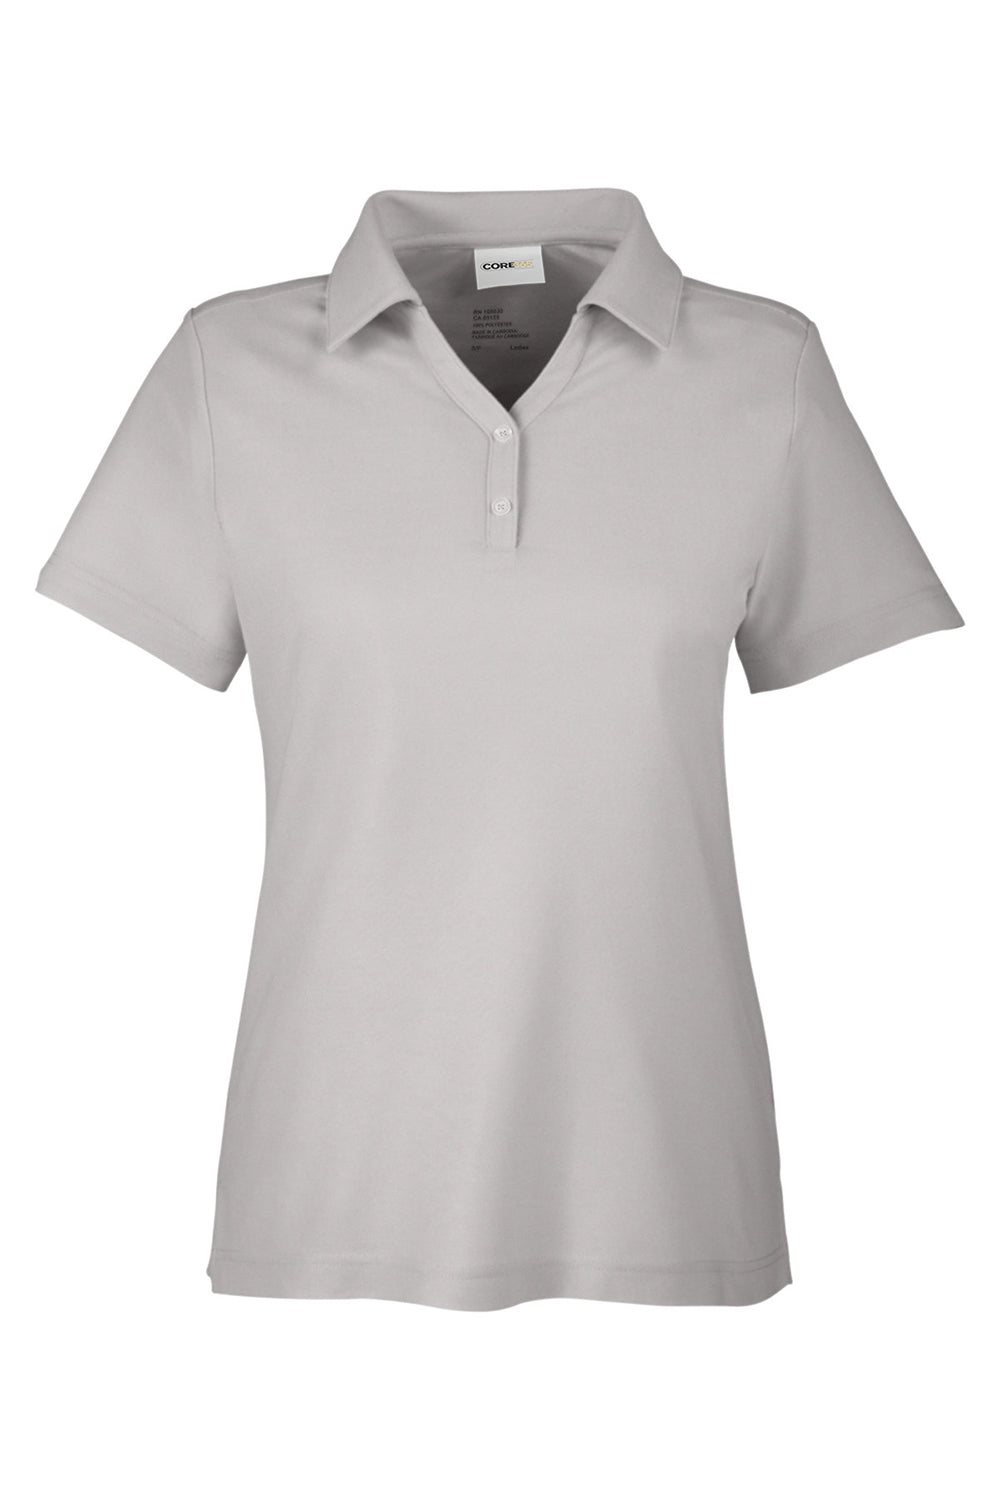 Core 365 CE112W Womens Fusion ChromaSoft Performance Moisture Wicking Pique Short Sleeve Polo Shirt Platinum Grey Flat Front